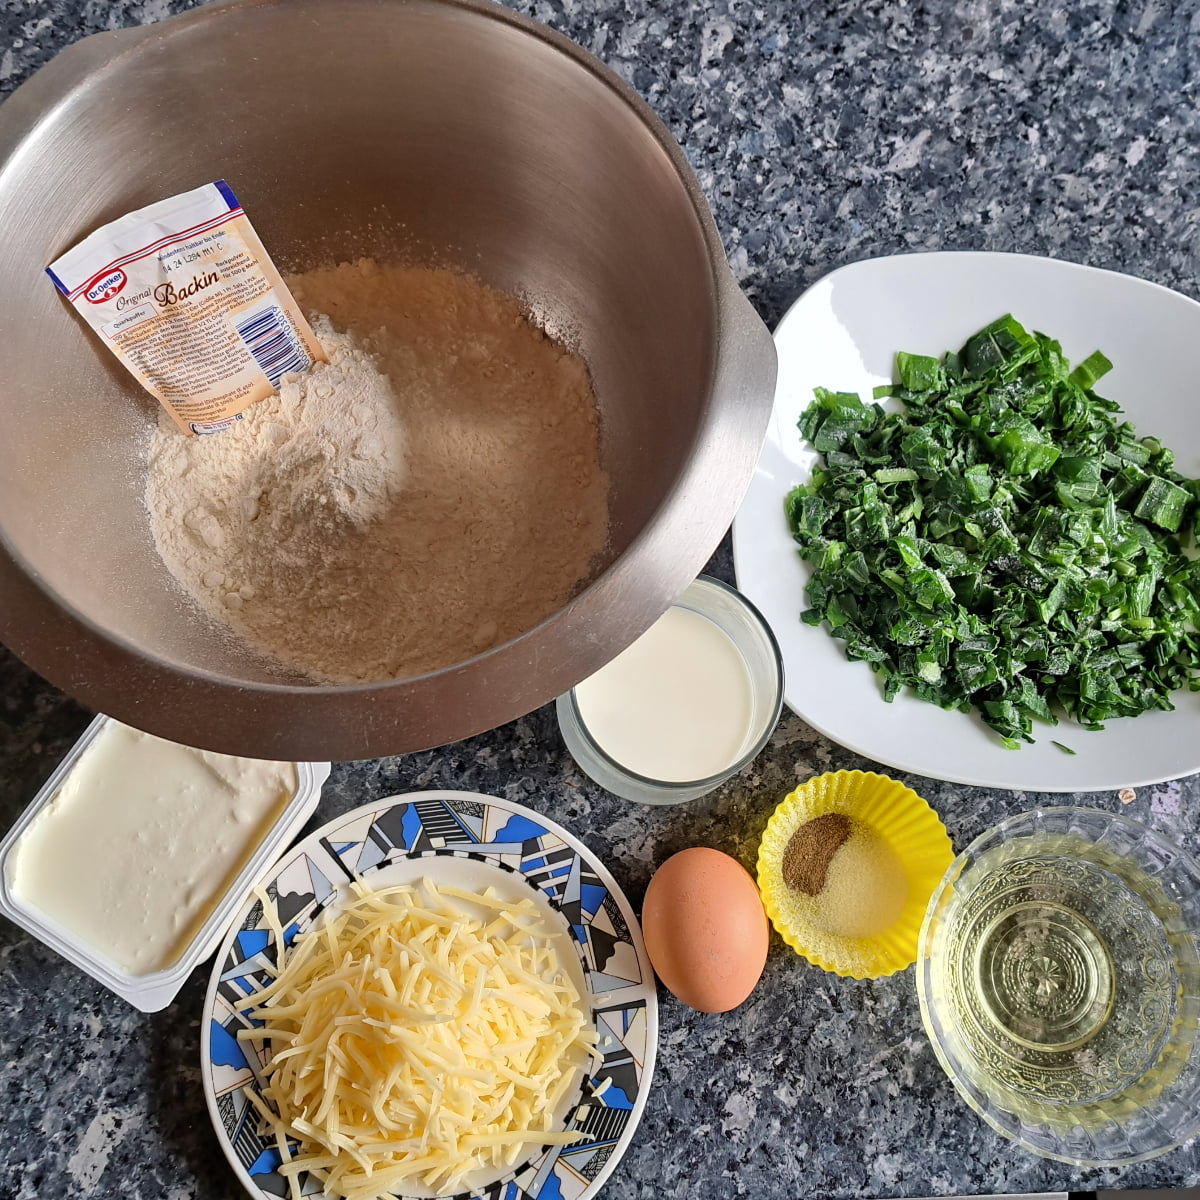 Ingredients for making wild garlic bread: Fkour, baking powder, quark, oil, egg, wild garlic, cheese and salt, arranged on the kitchen counter. 